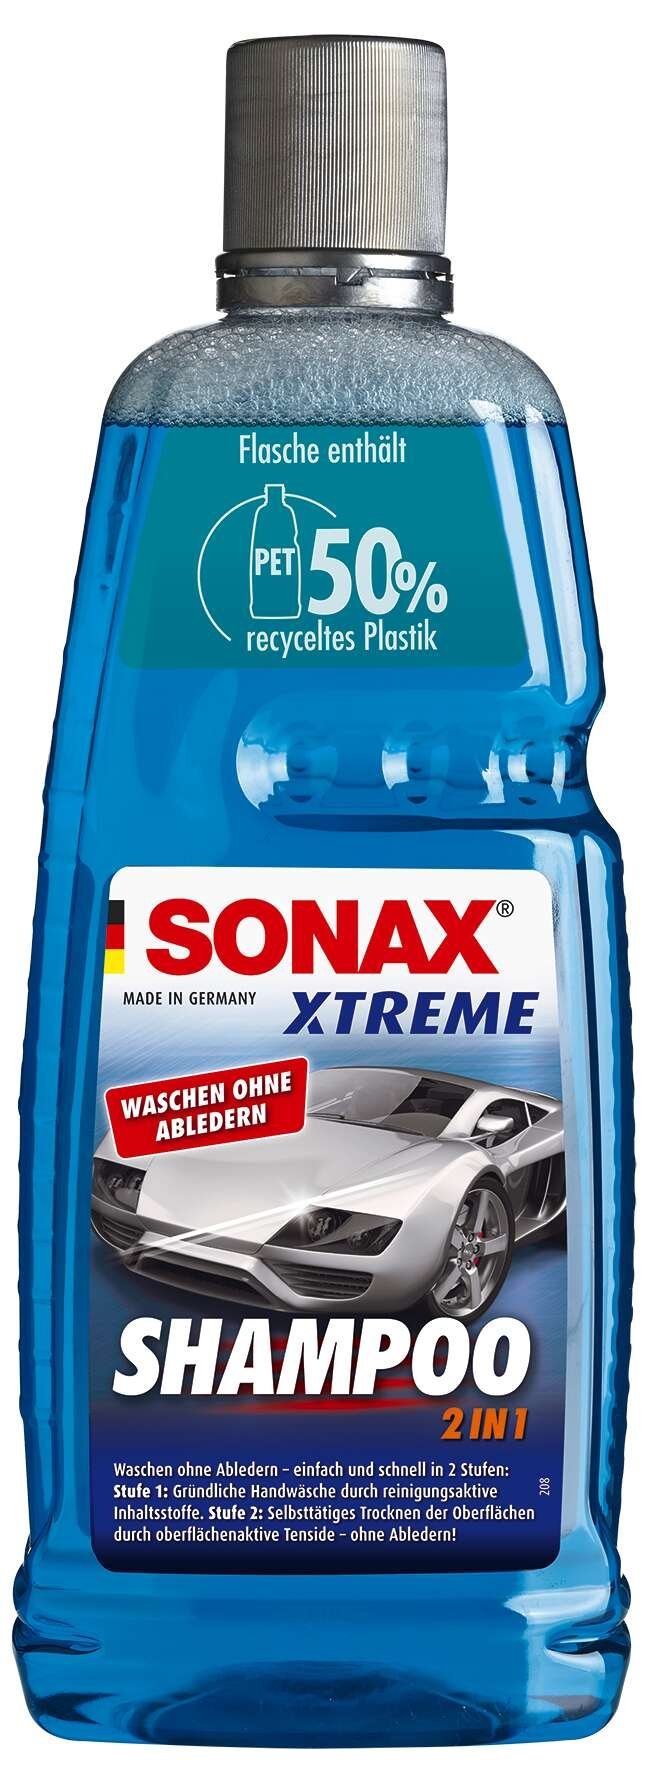 SONAX XTREME Shampoo 2in1, 1000 ml PET-Flasche